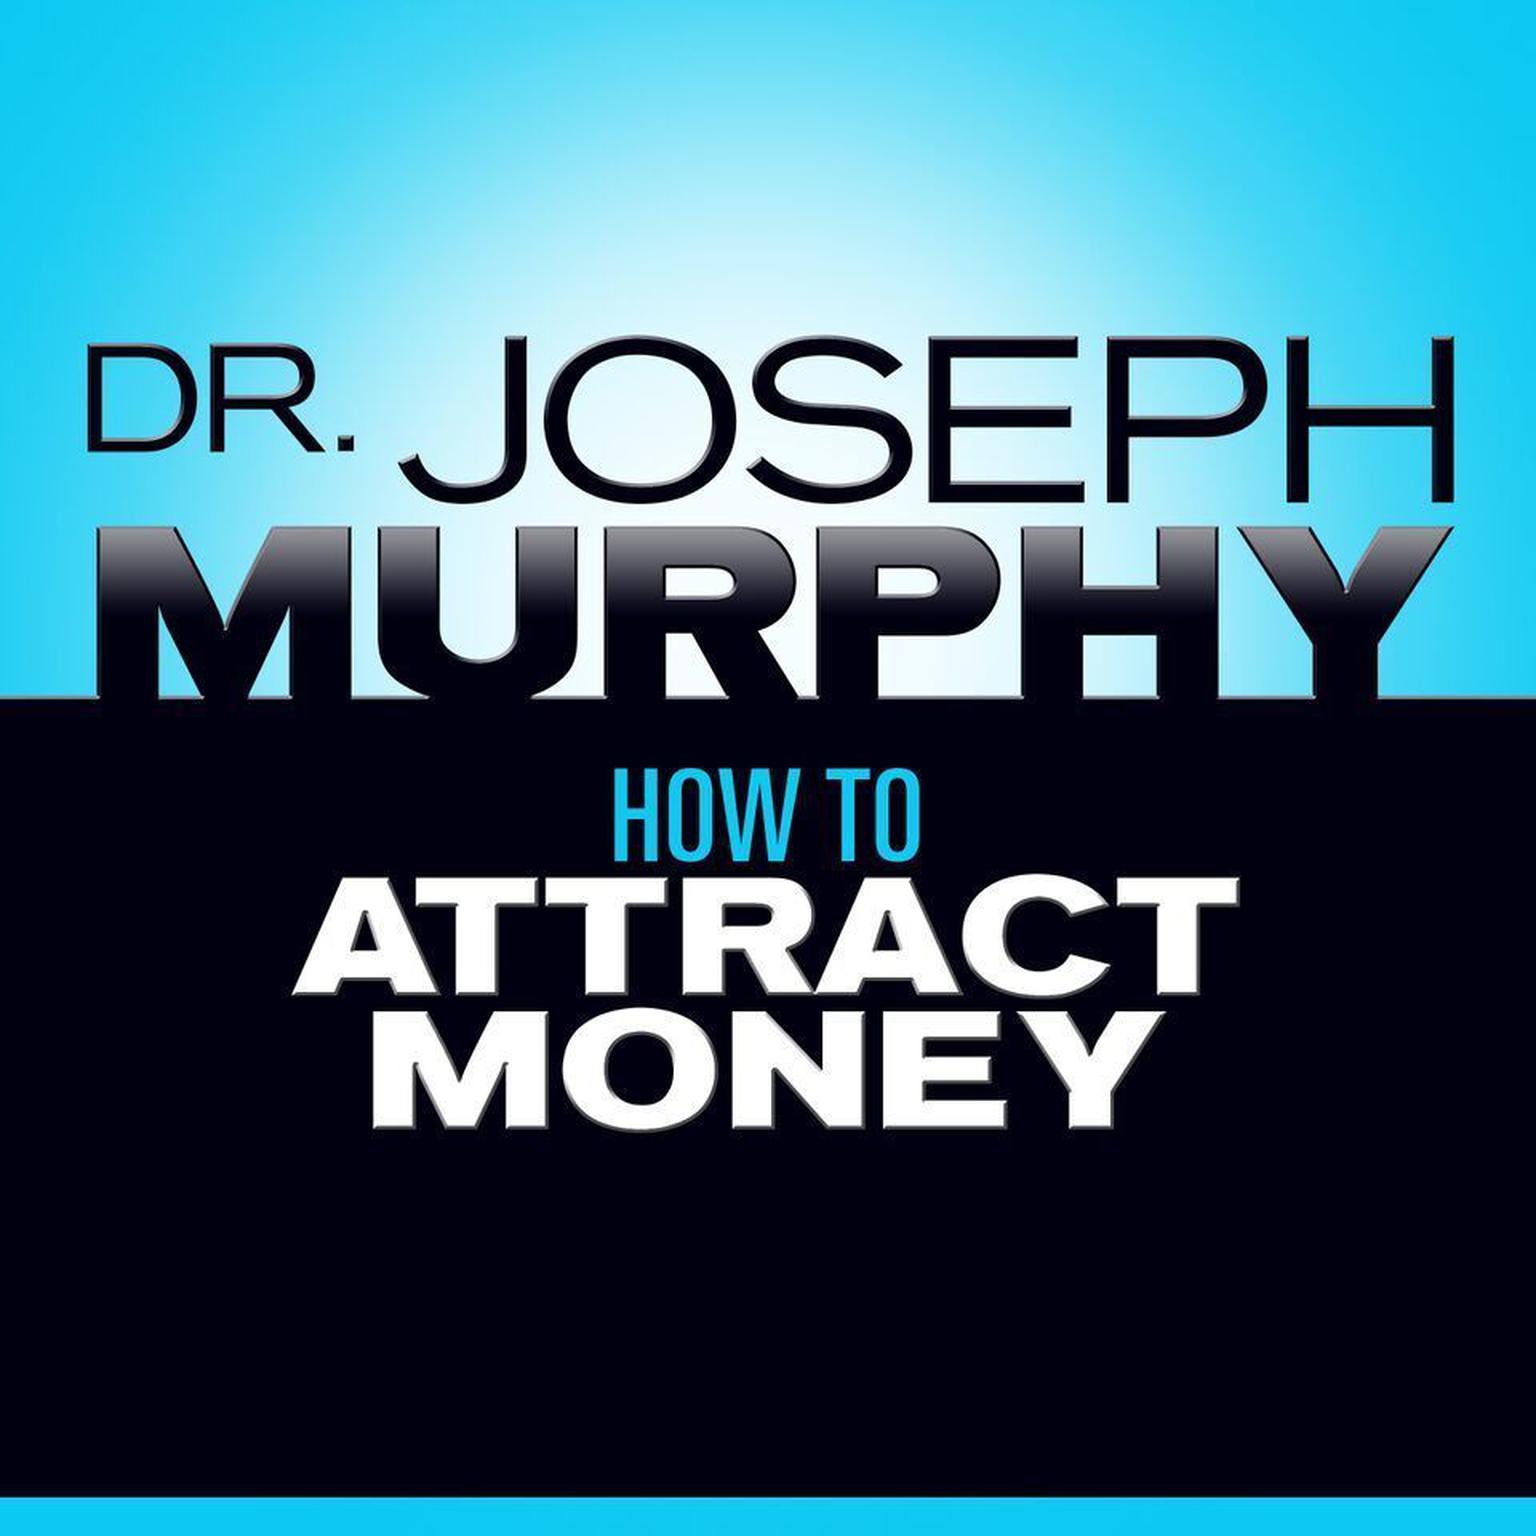 How to Attract Money Audiobook, by Joseph Murphy